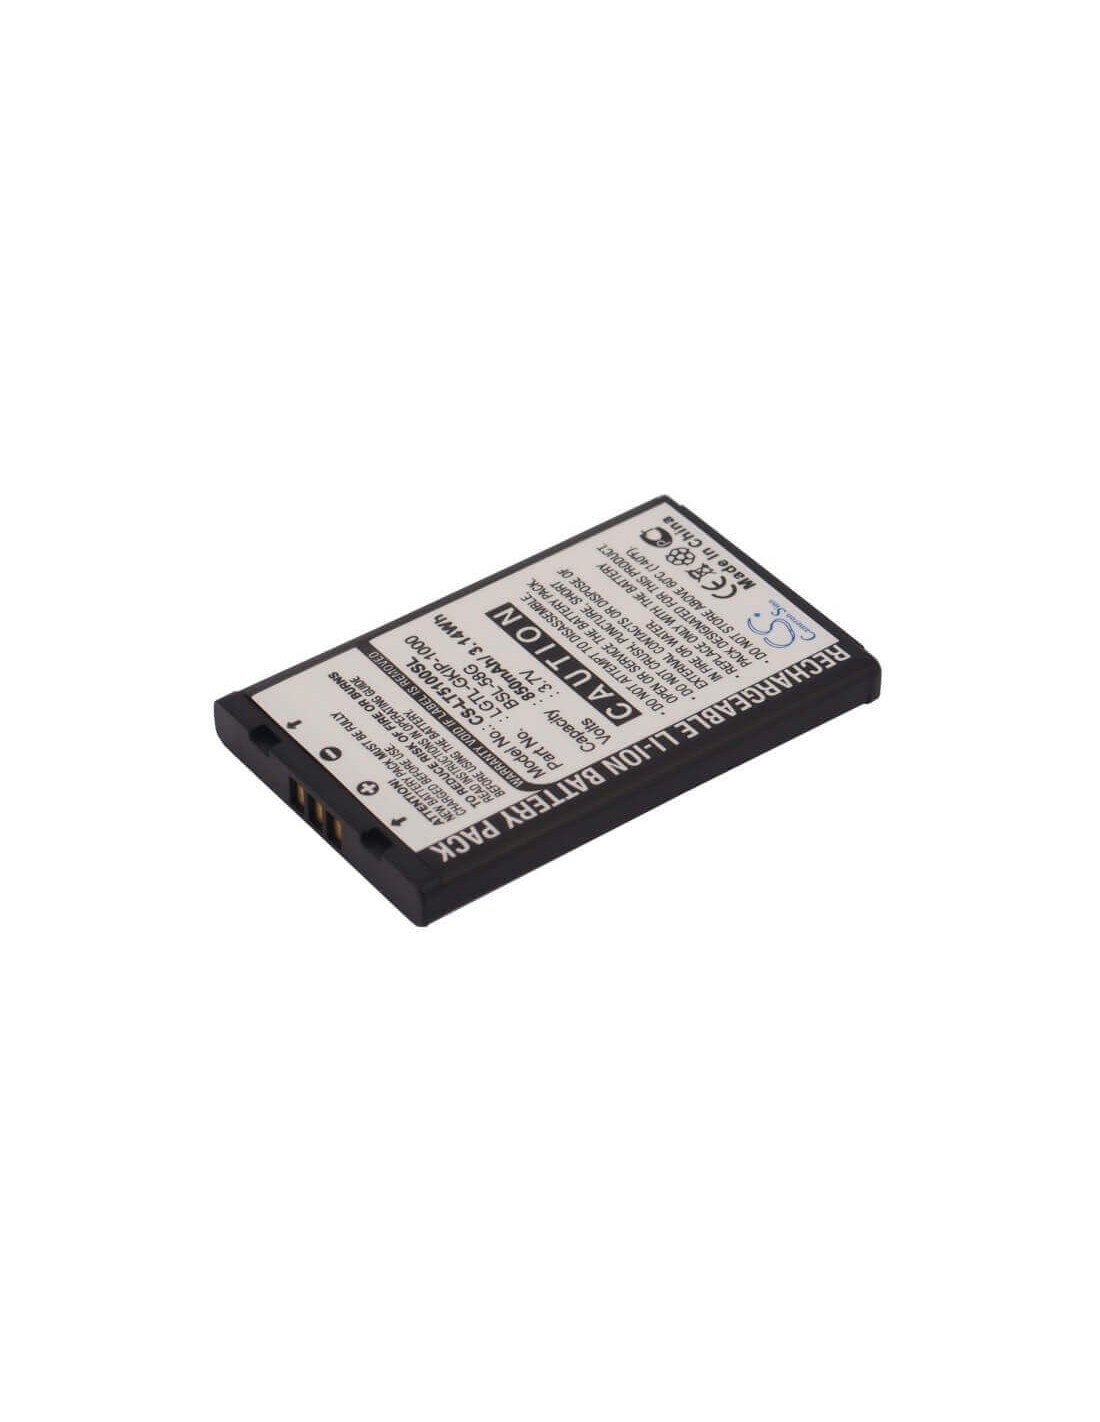 Battery for LG T5100, A7110, G920 3.7V, 850mAh - 3.15Wh